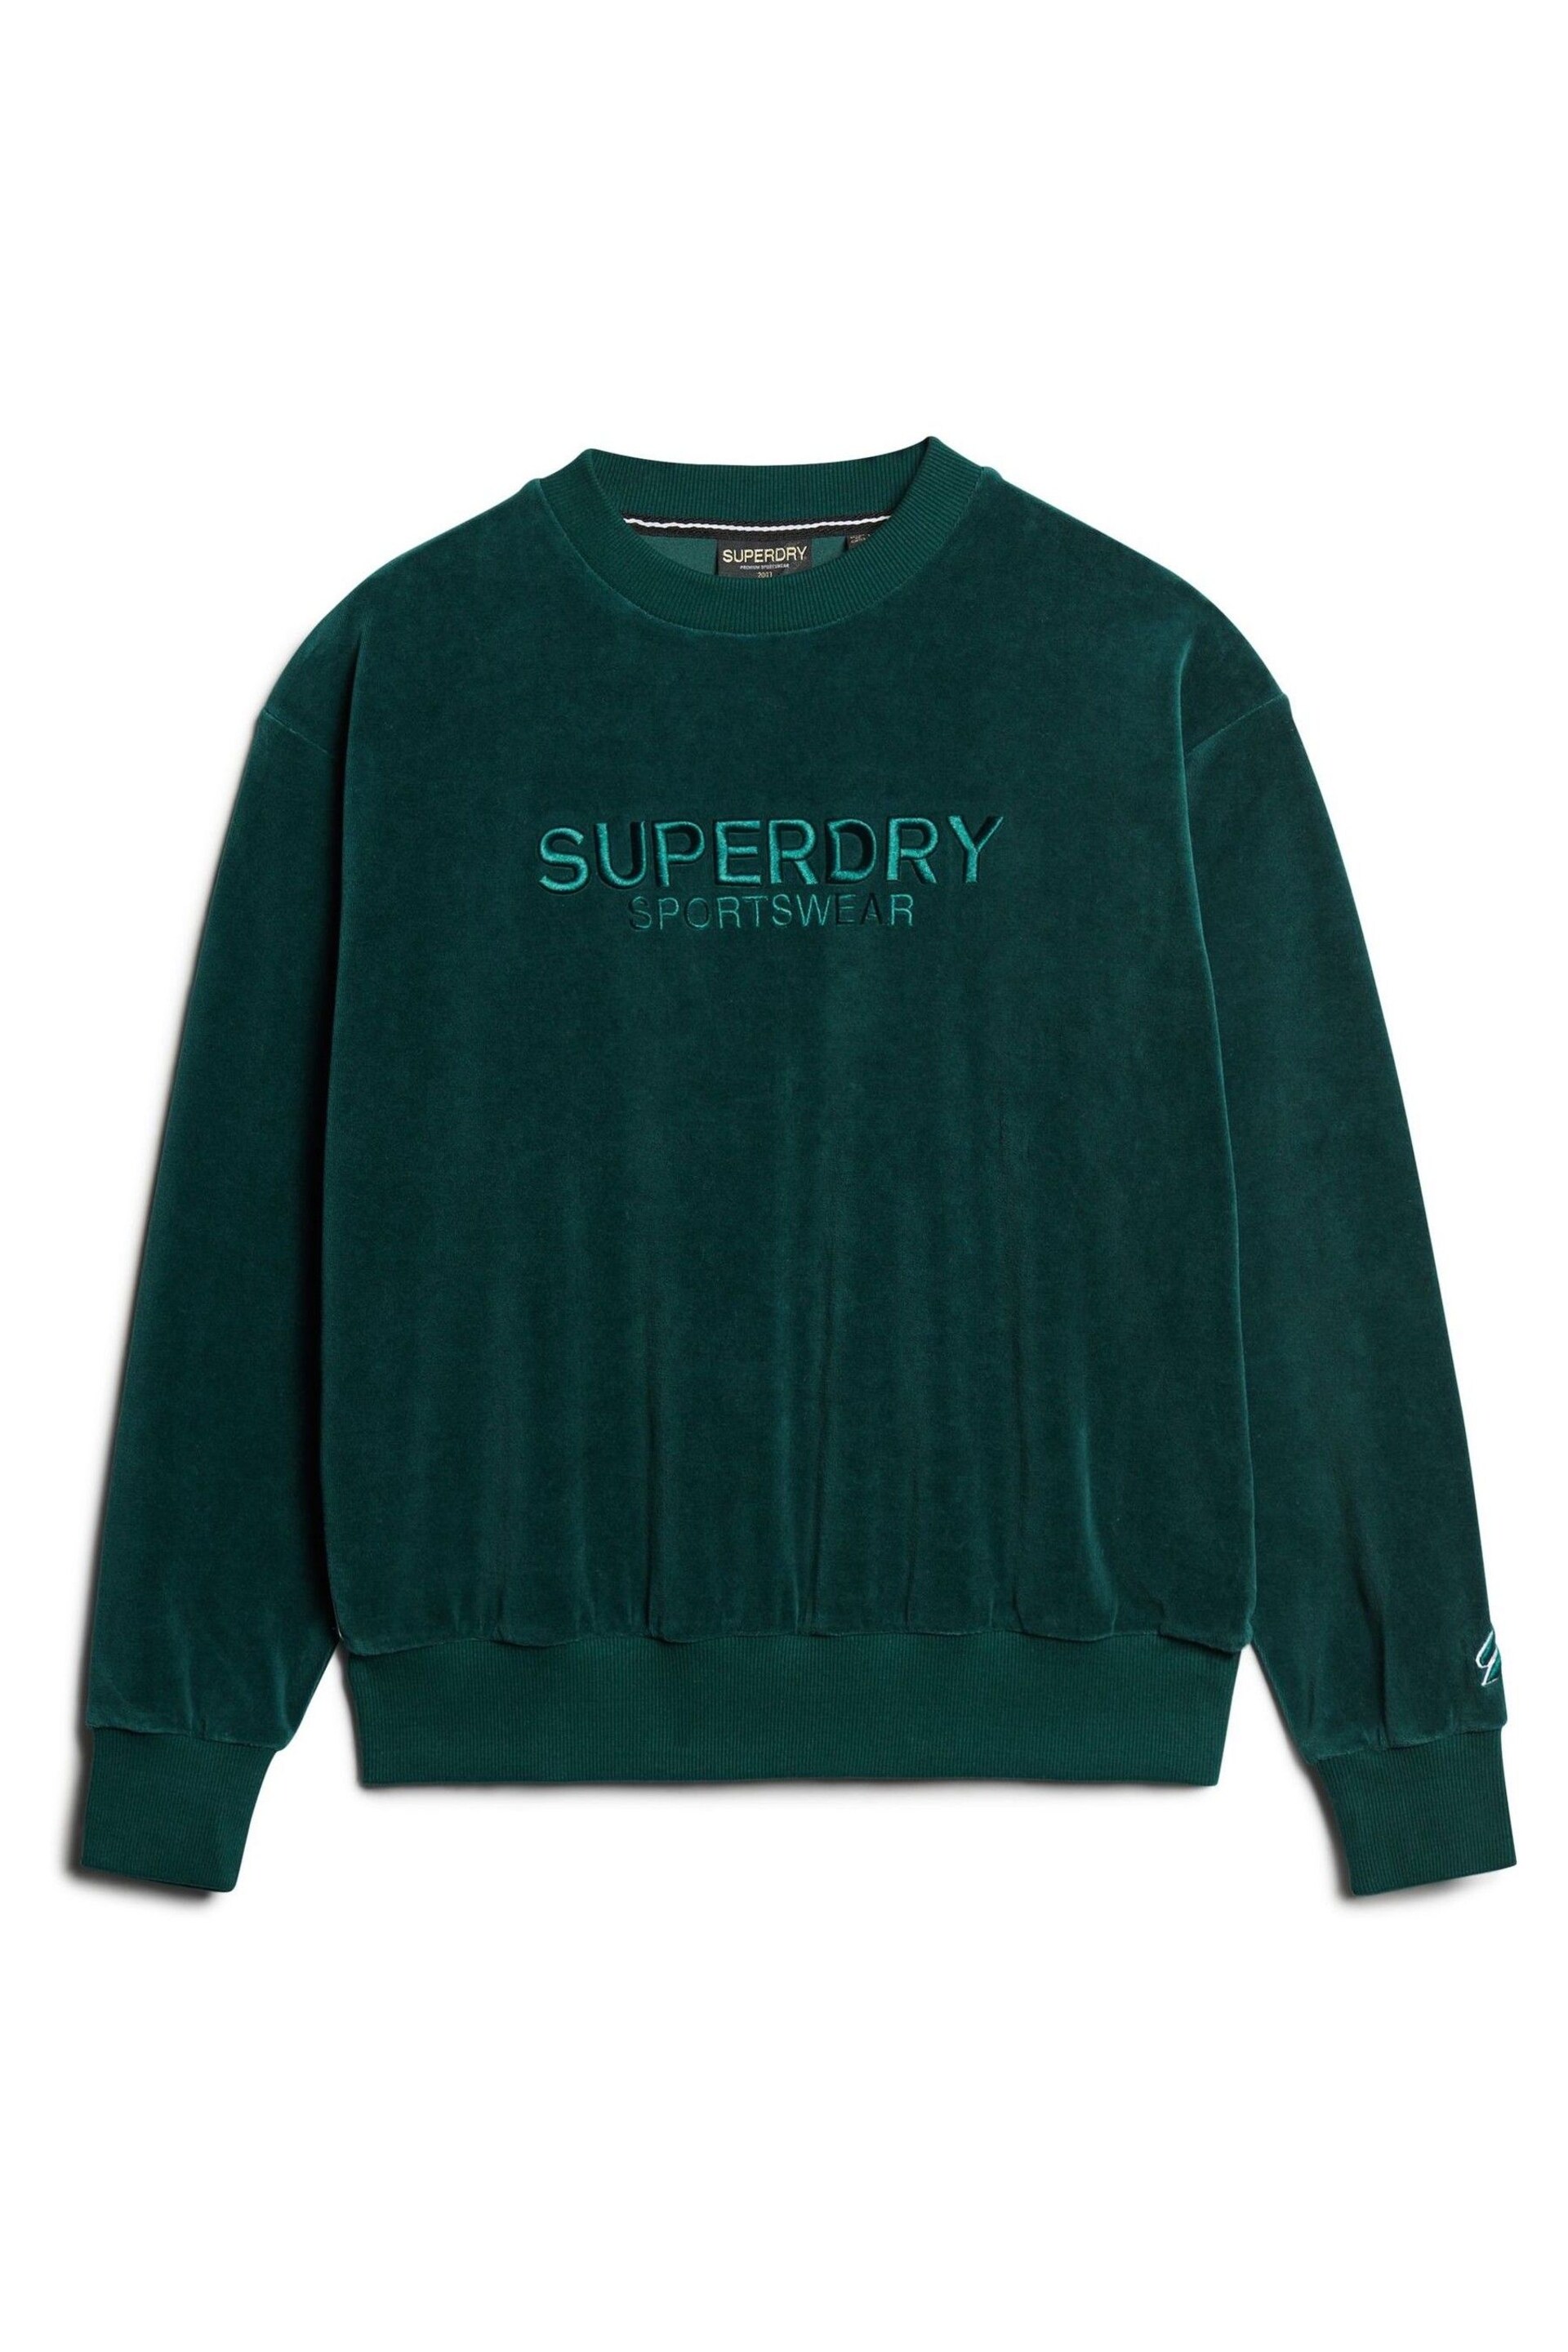 SUPERDRY Green SUPERDRY Velour Graphic Boxy Crew Sweatshirt - Image 4 of 6